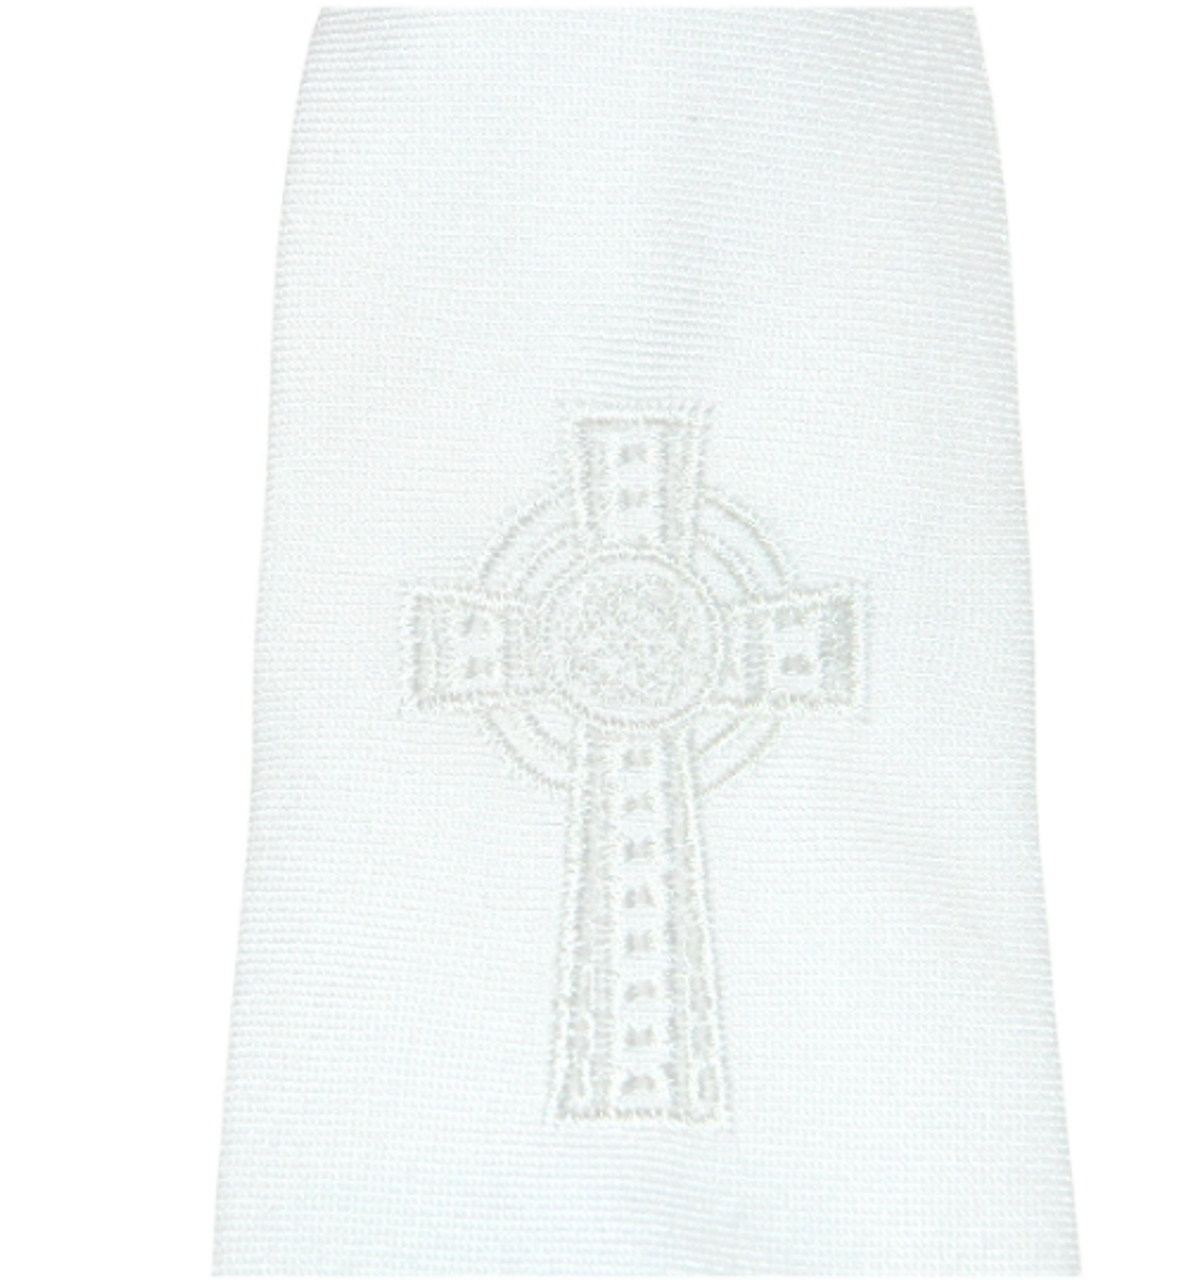 Boy's First Communion Celtic Cross Tie